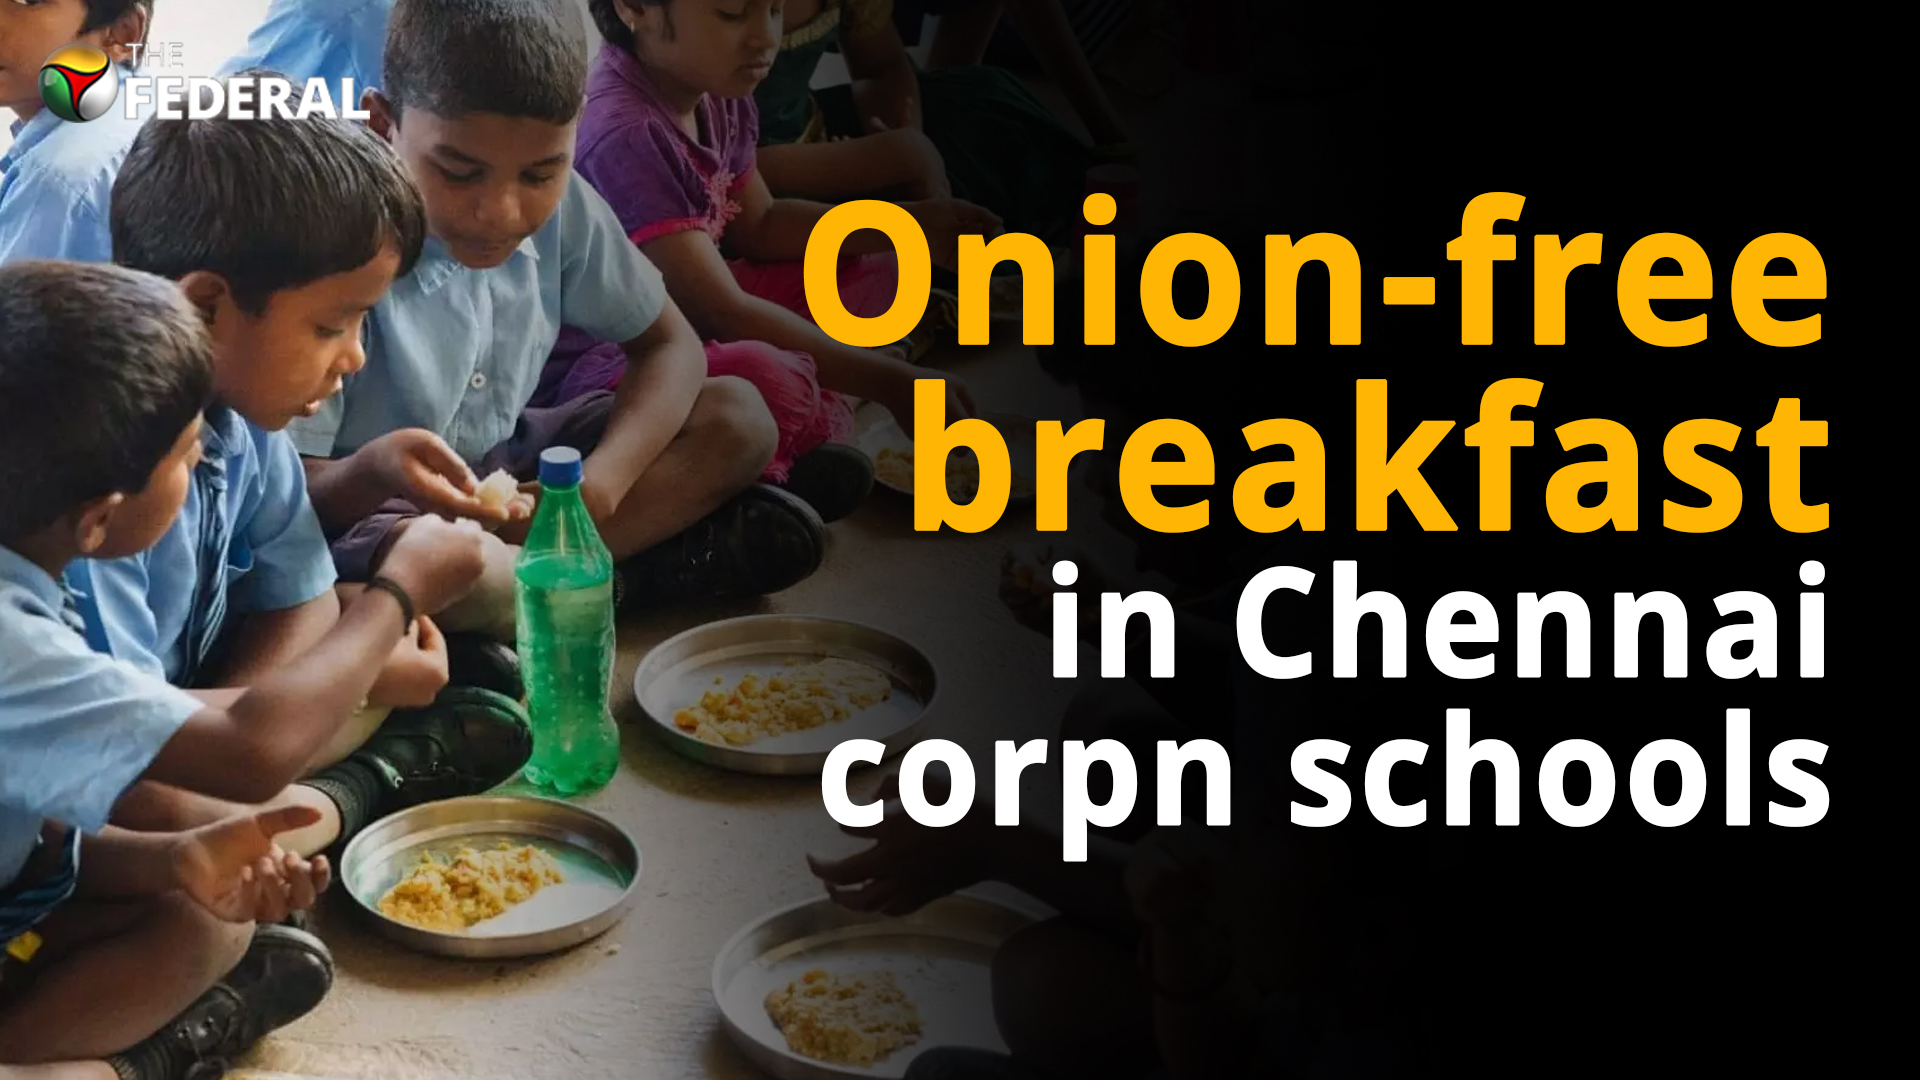 Corporation school children to have onion-free breakfast